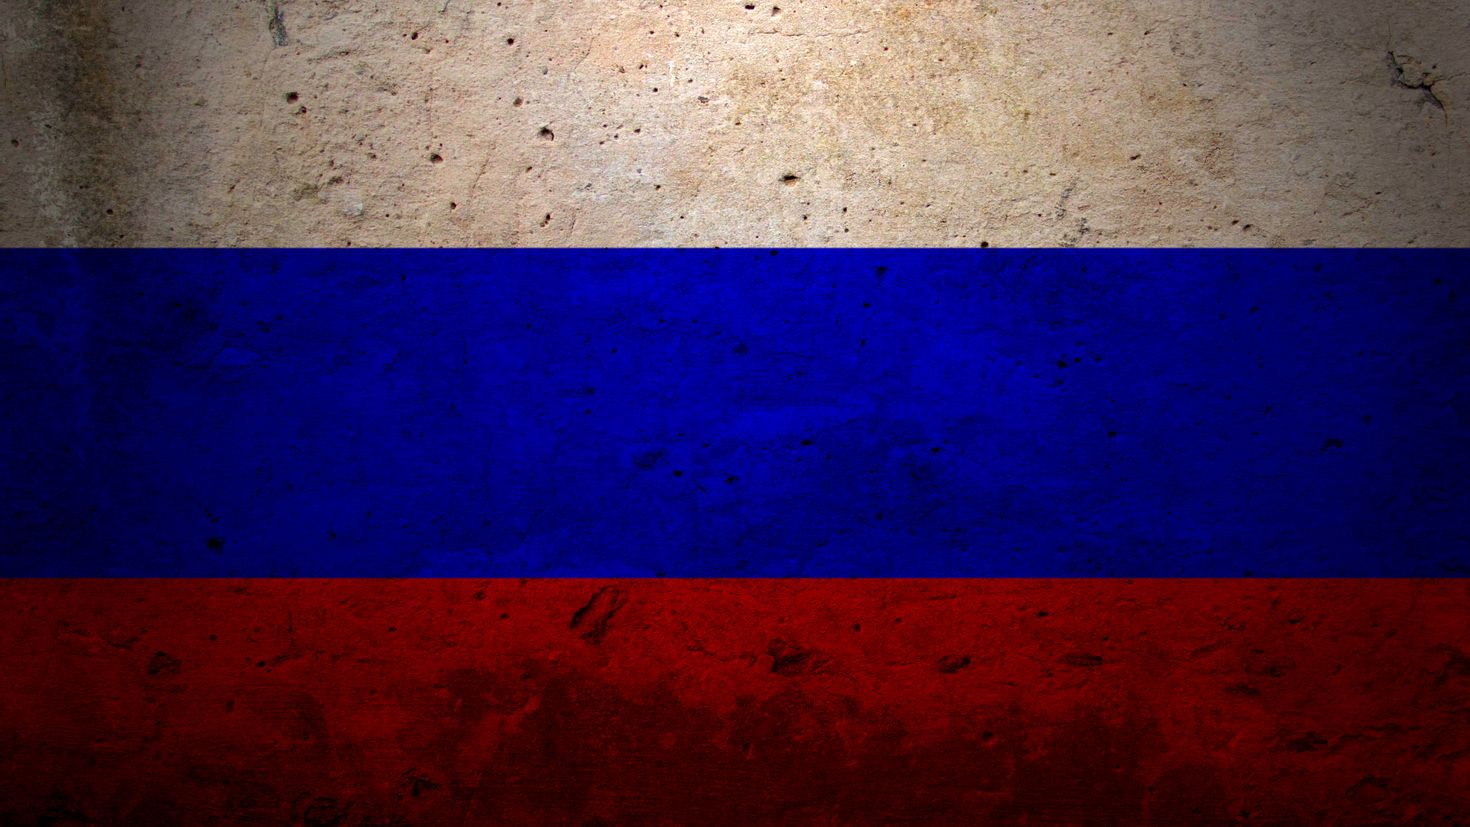 ава пабг с флагом россии фото 6